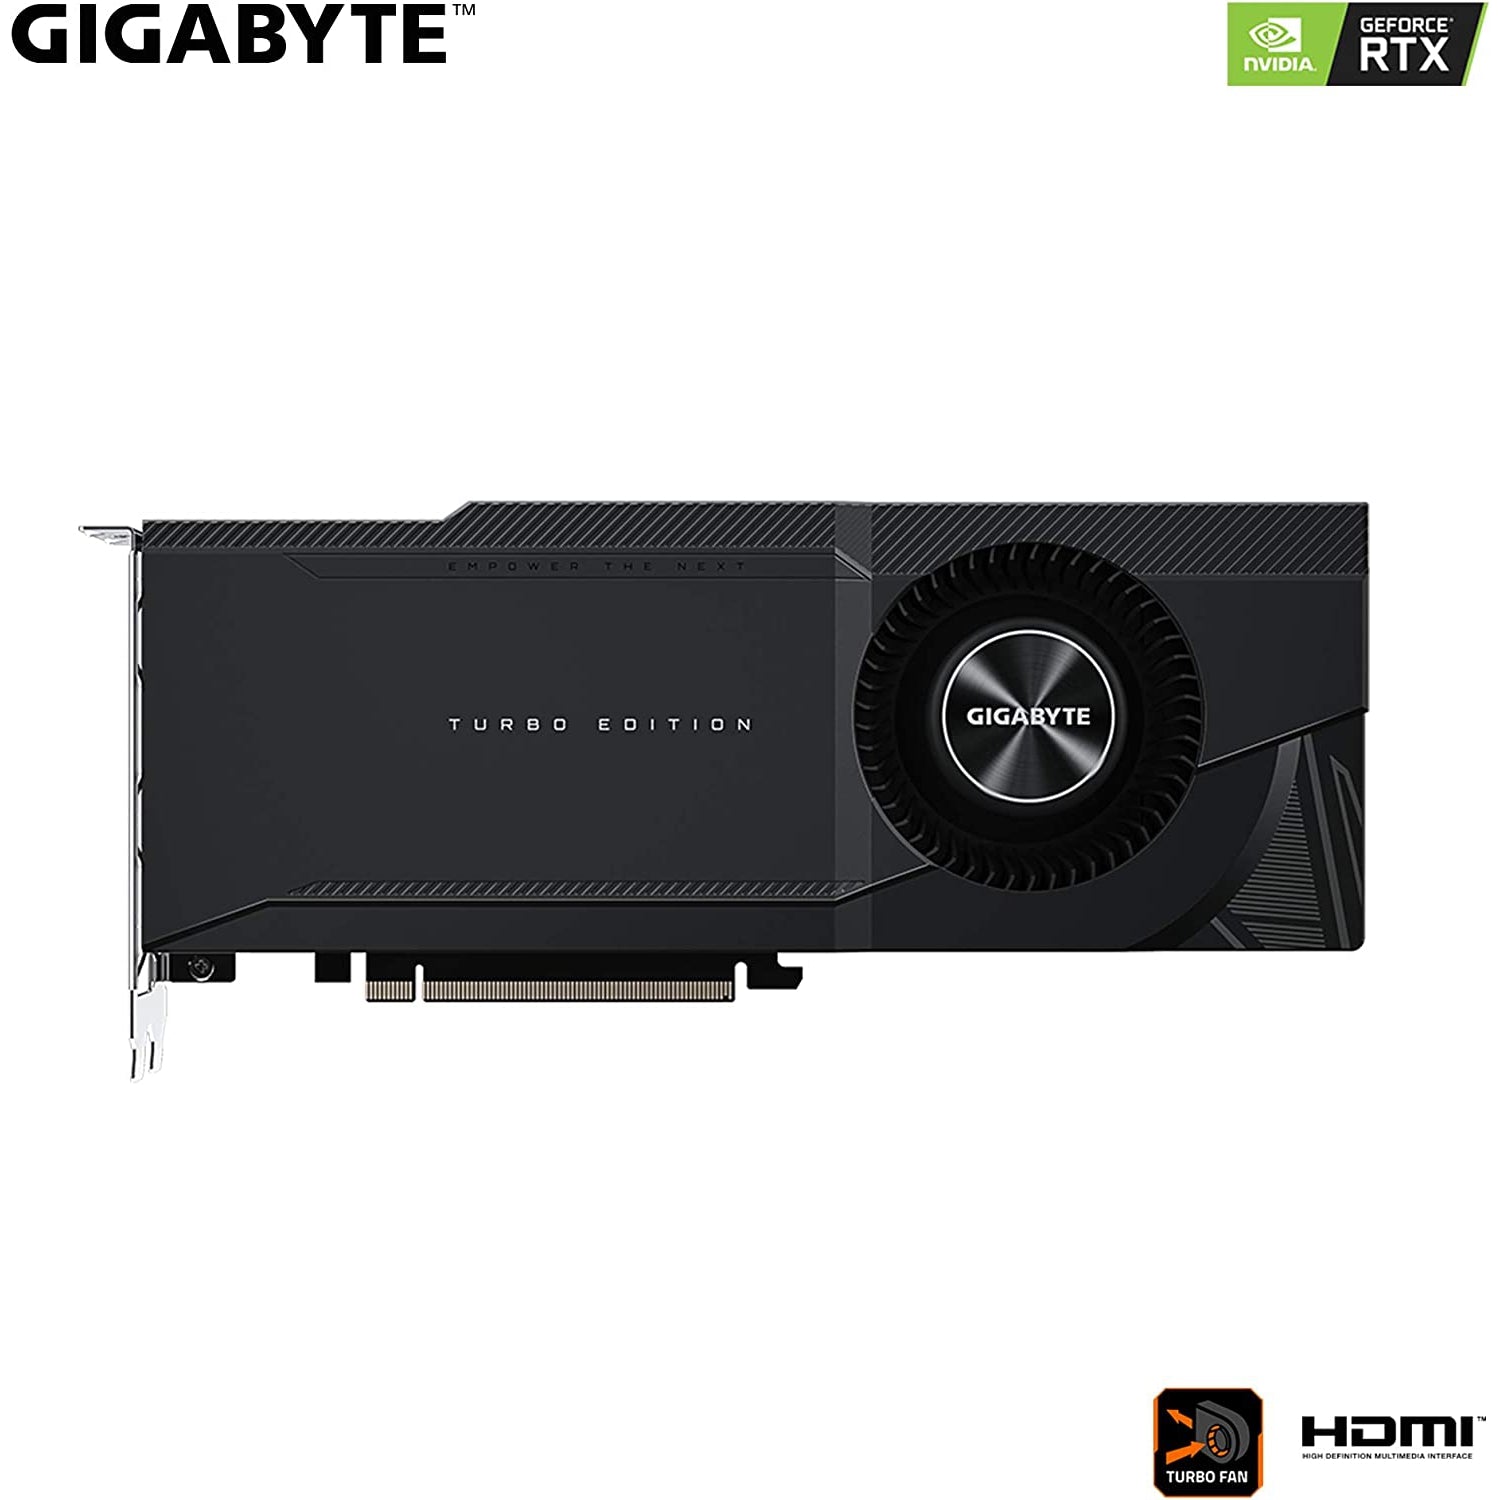 Gigabyte GeForce RTX 3090 TURBO 24GB Graphics Card